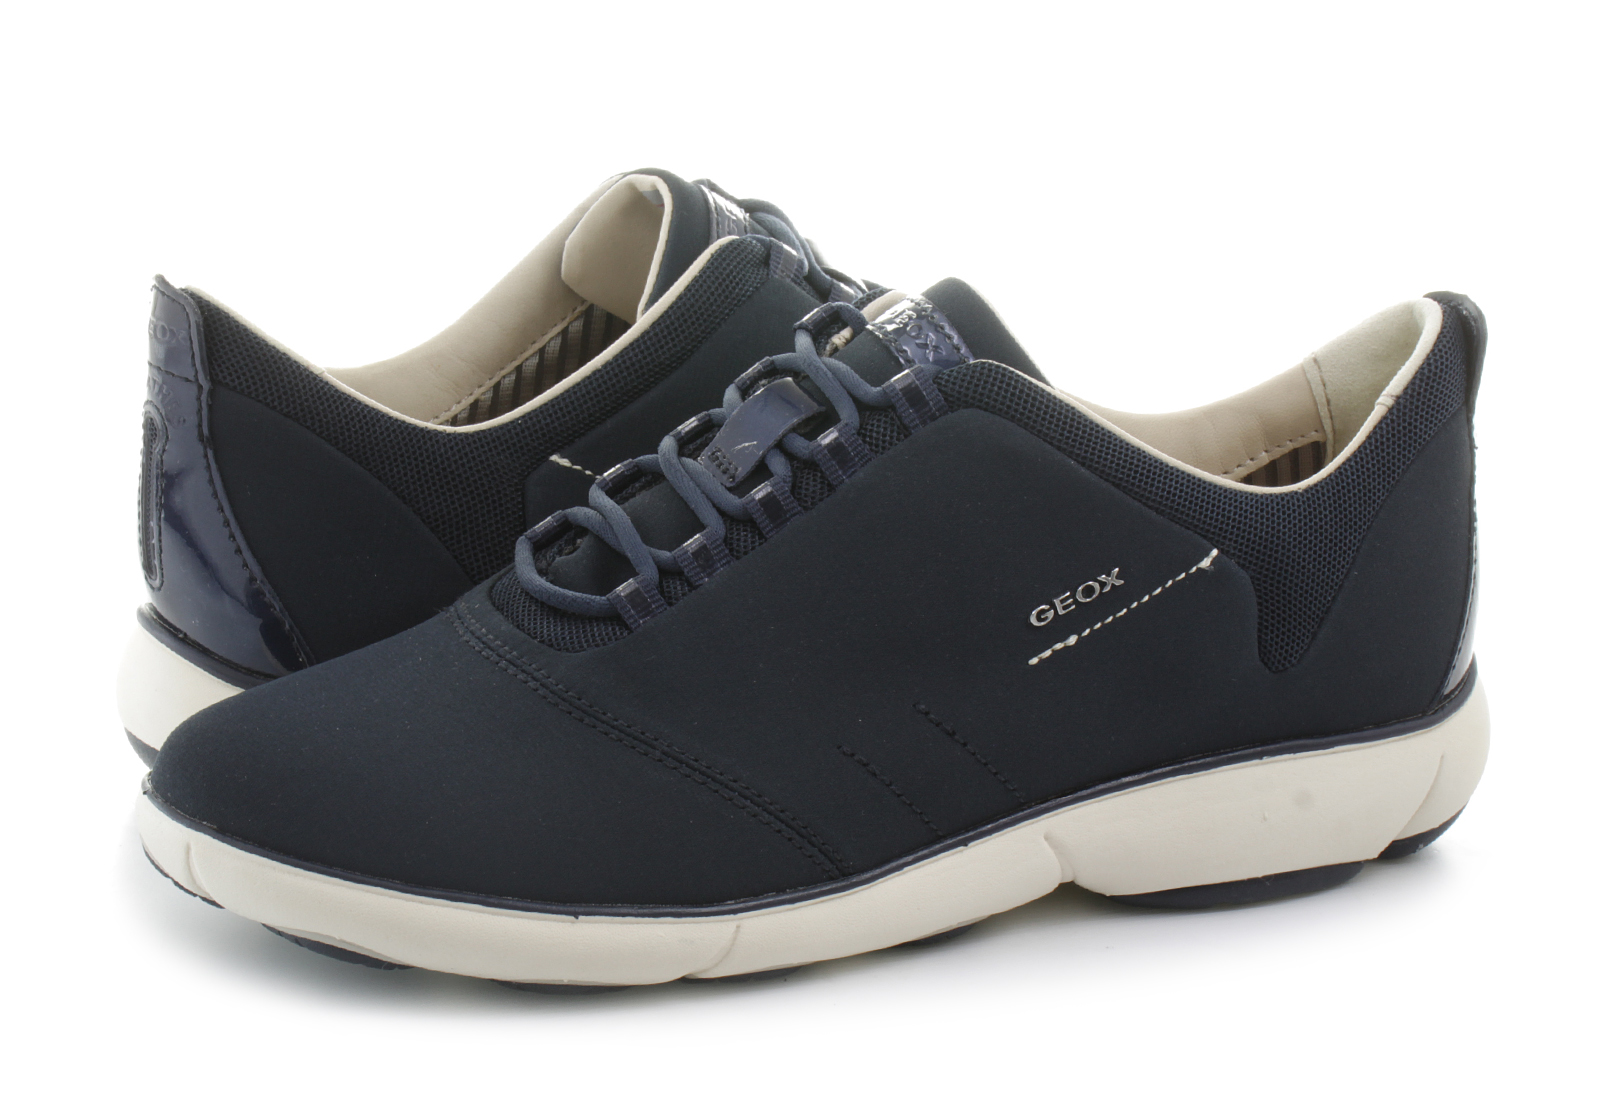 Geox Shoes - D Nebula - 1EA-0011-4002 - Online shop for ...